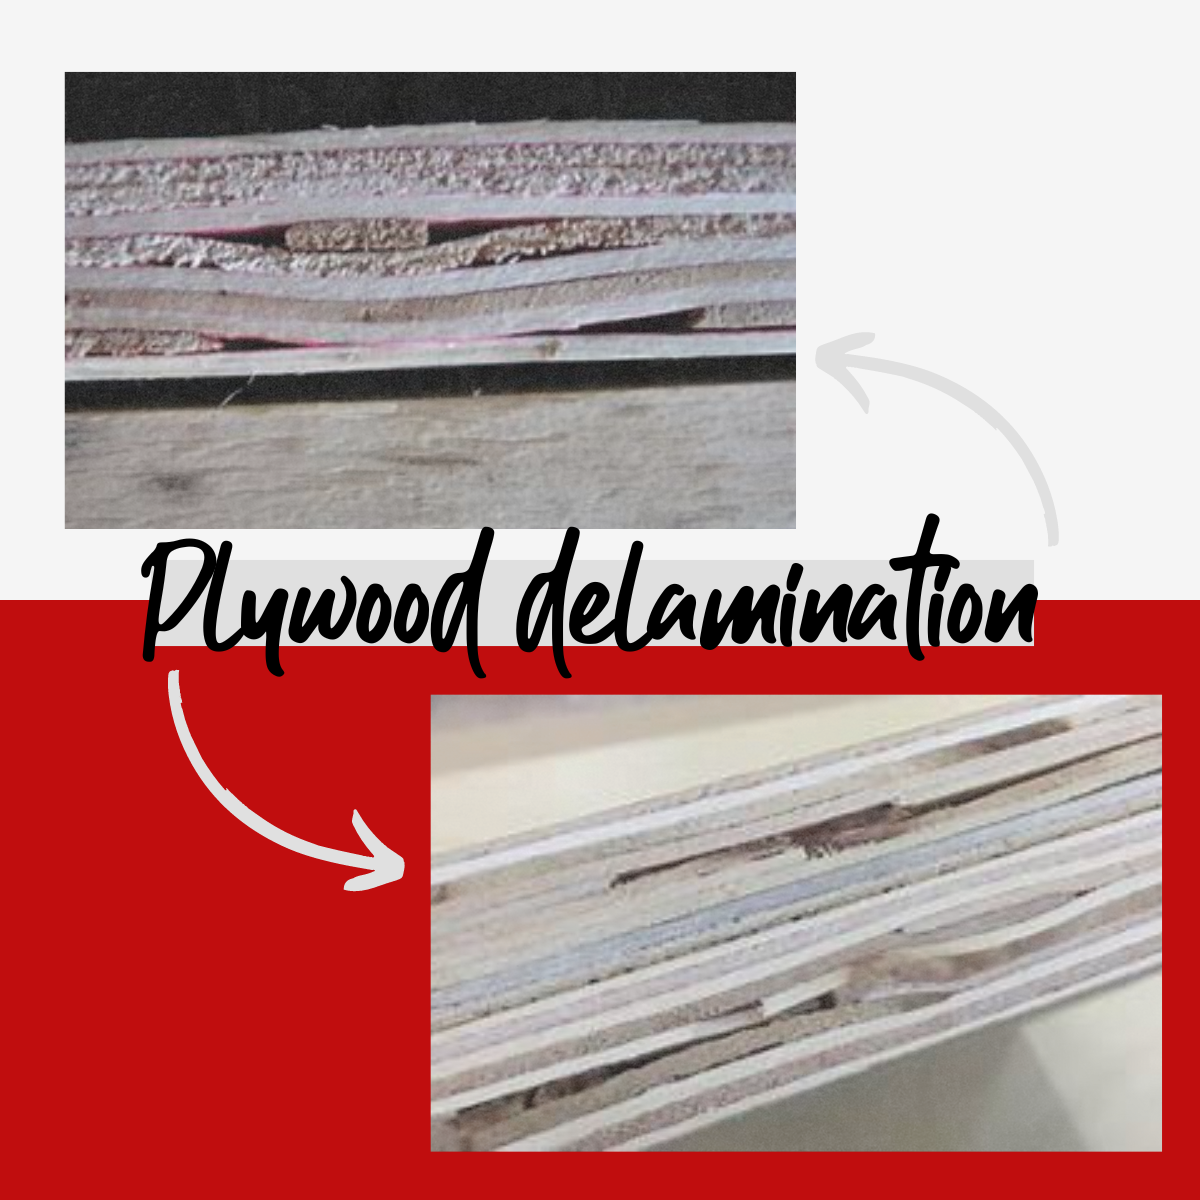 Examples of plywood delamination - Elliotts